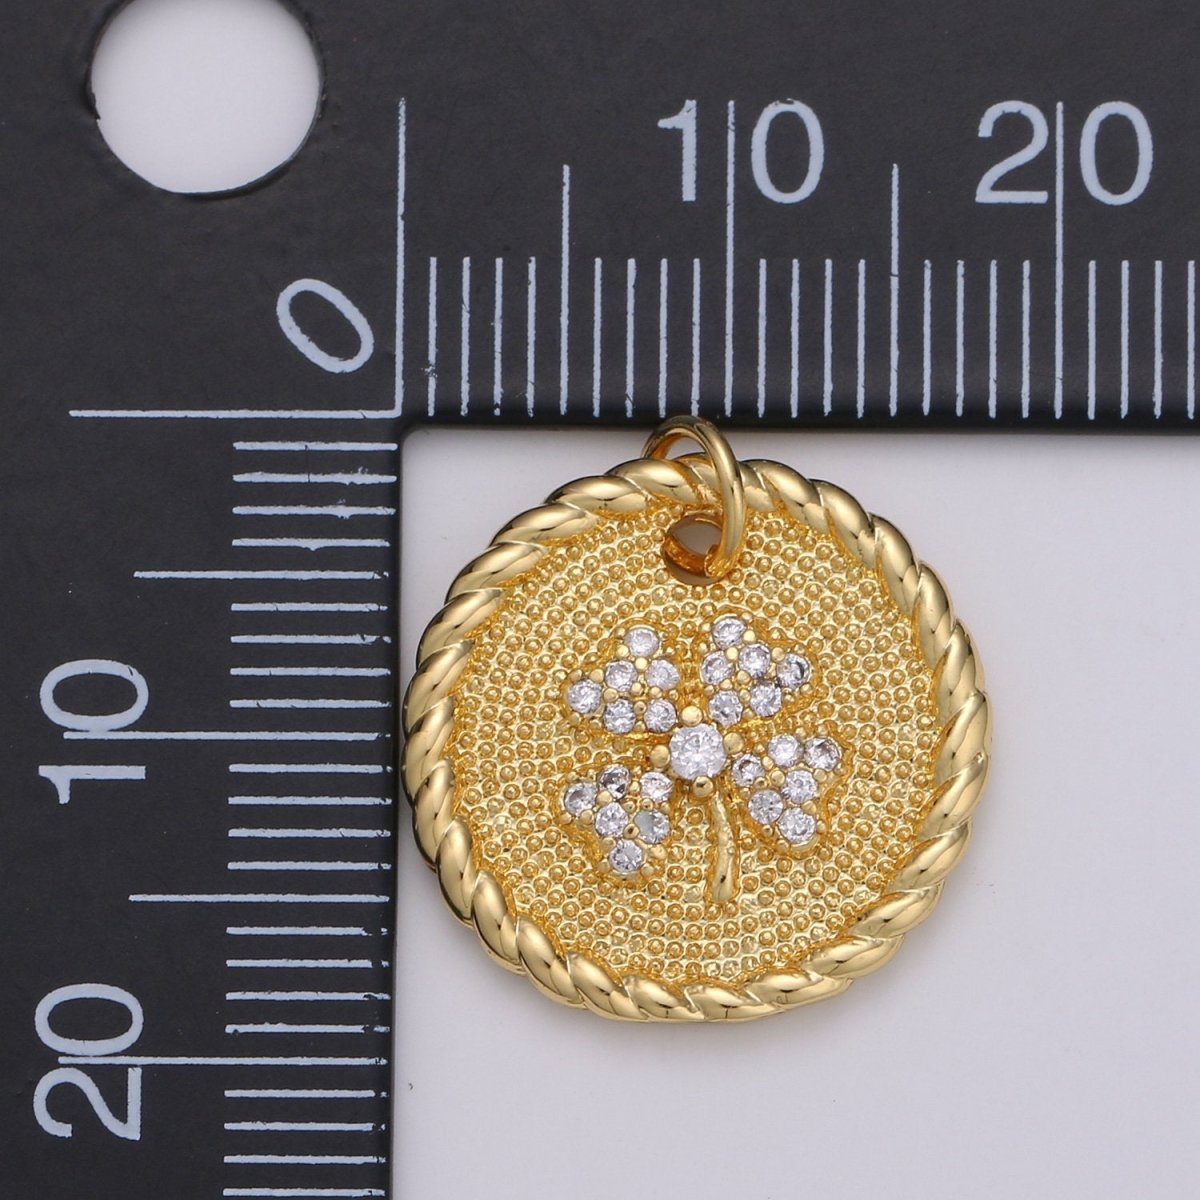 Cubic Shamrock Charm 24k Gold Filled Shamrock Celtic Four Leaf Clover Lucky Charm, 18X18 mm for Necklace Earring Bracelet Jewelry Making D-361 - DLUXCA